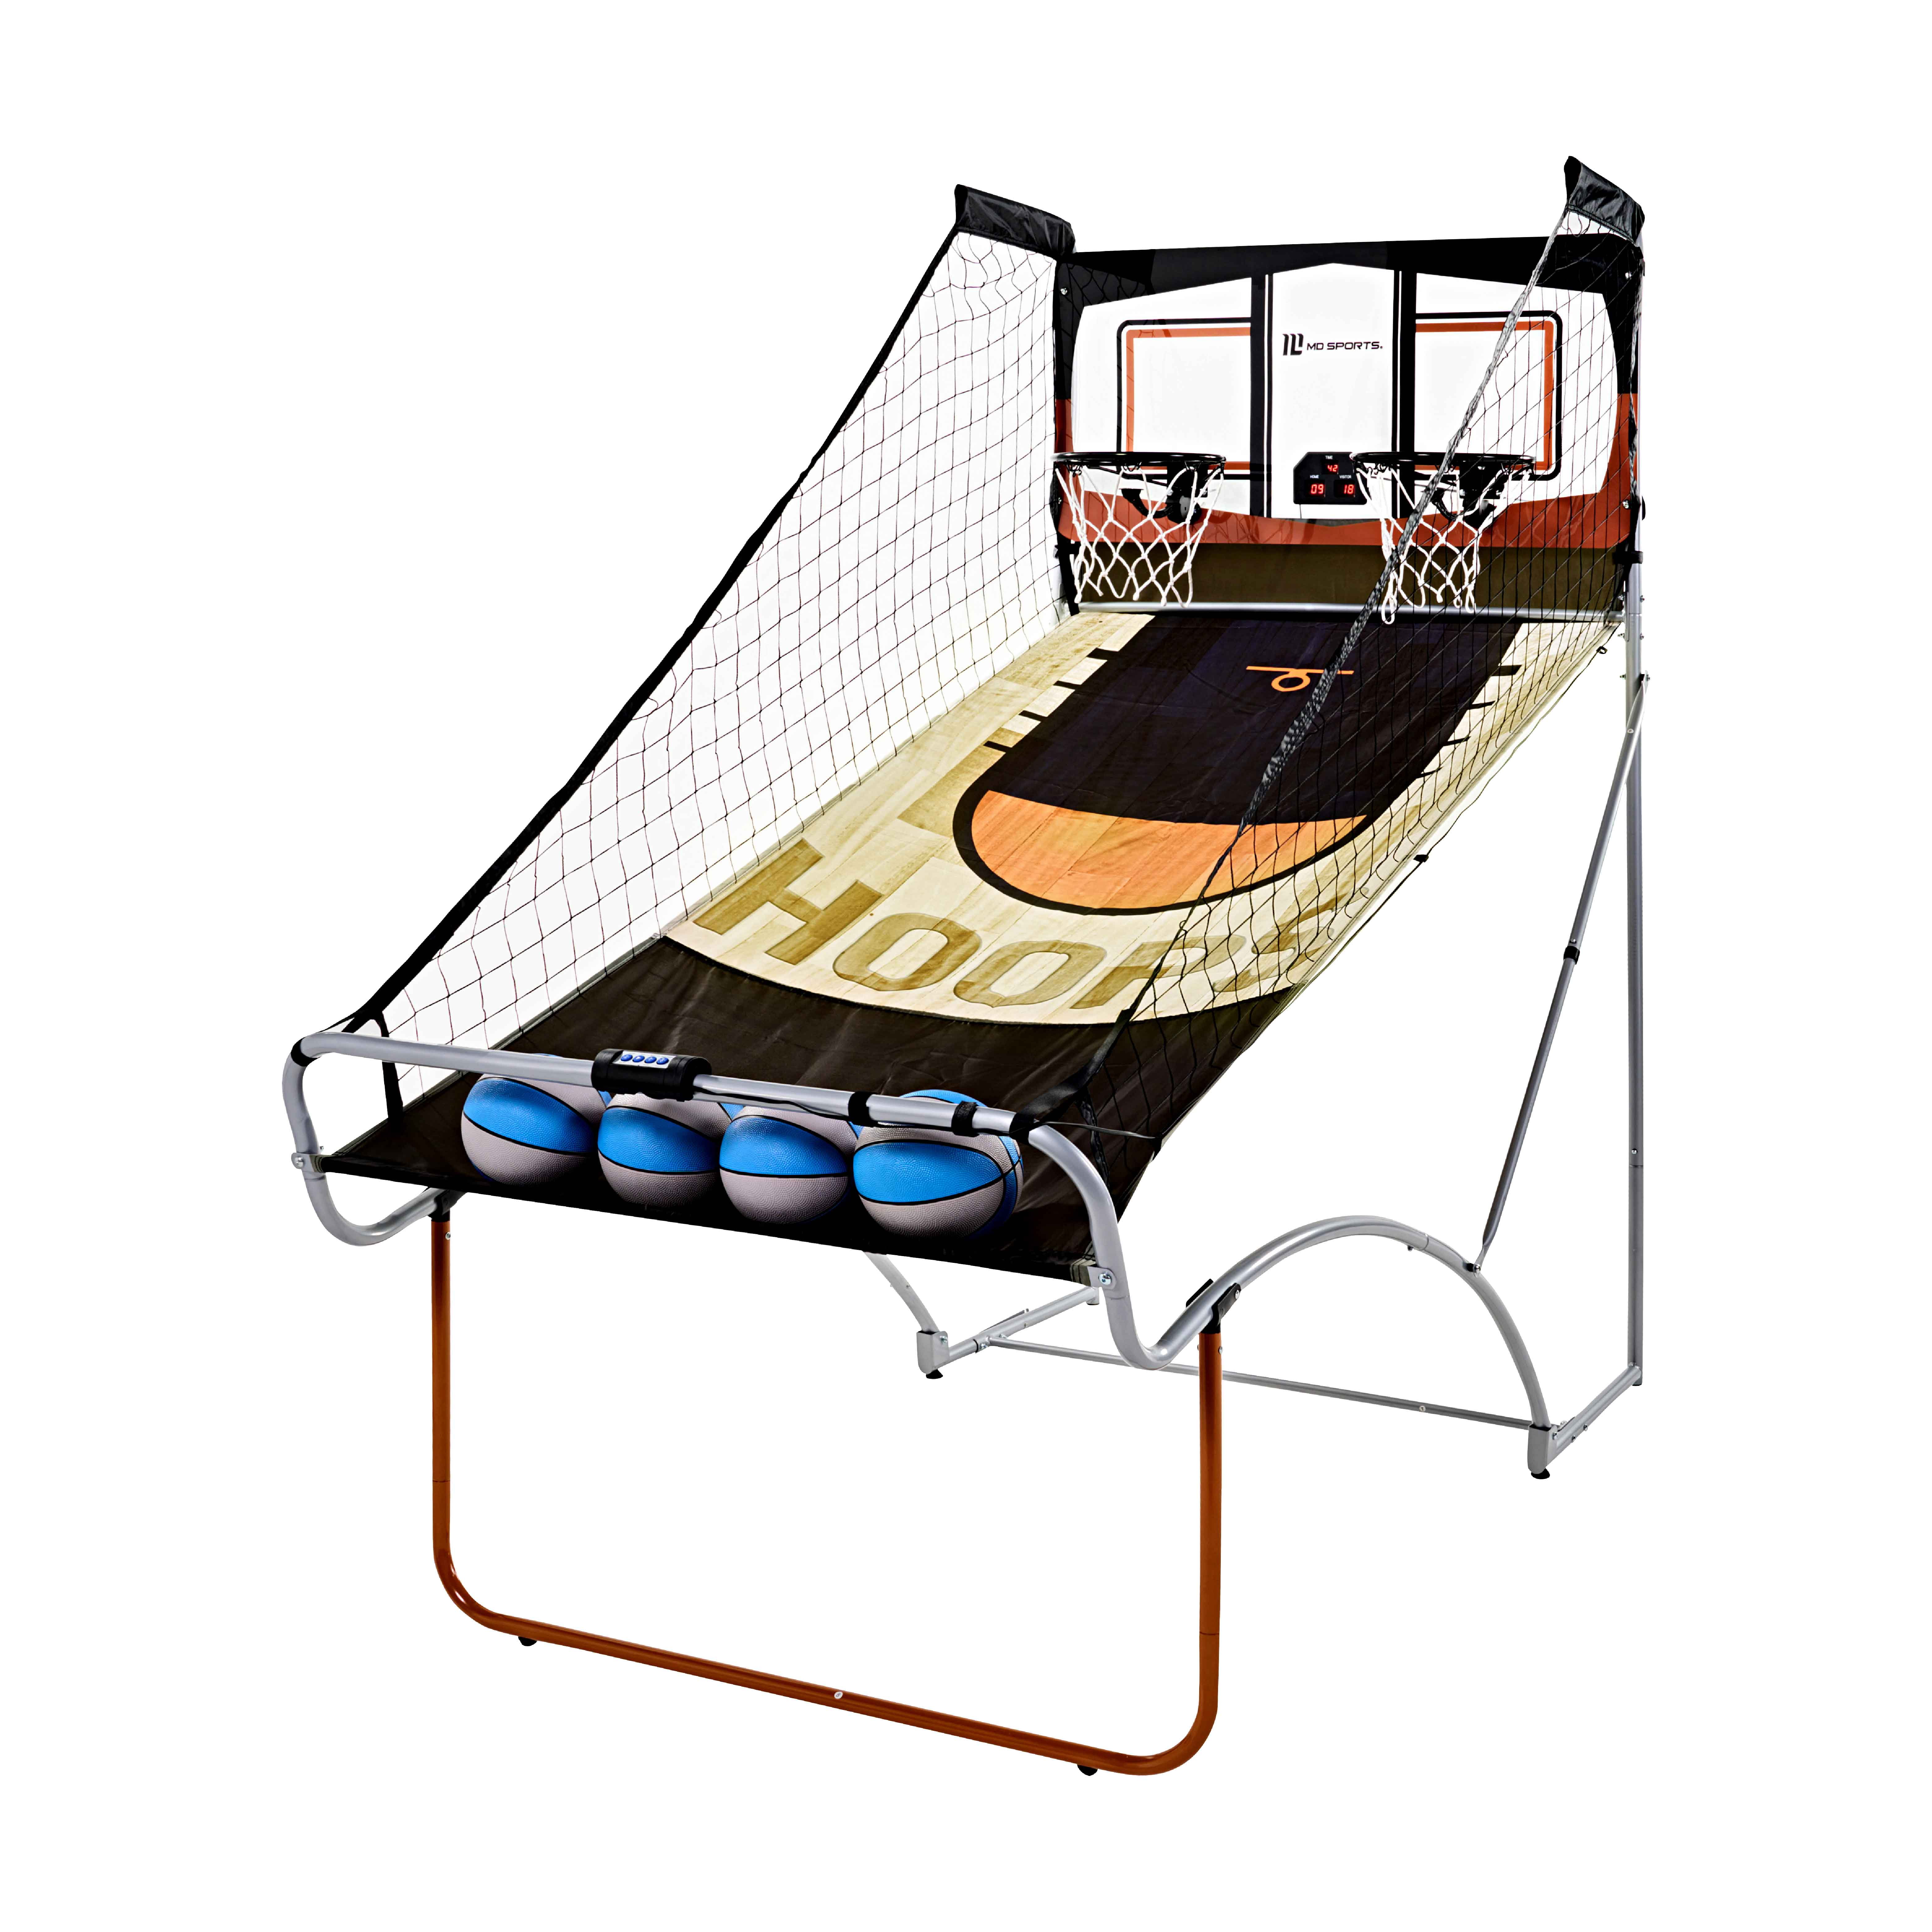 Espn Space Saving 2 Player Arcade Cage Basketball Game : Target